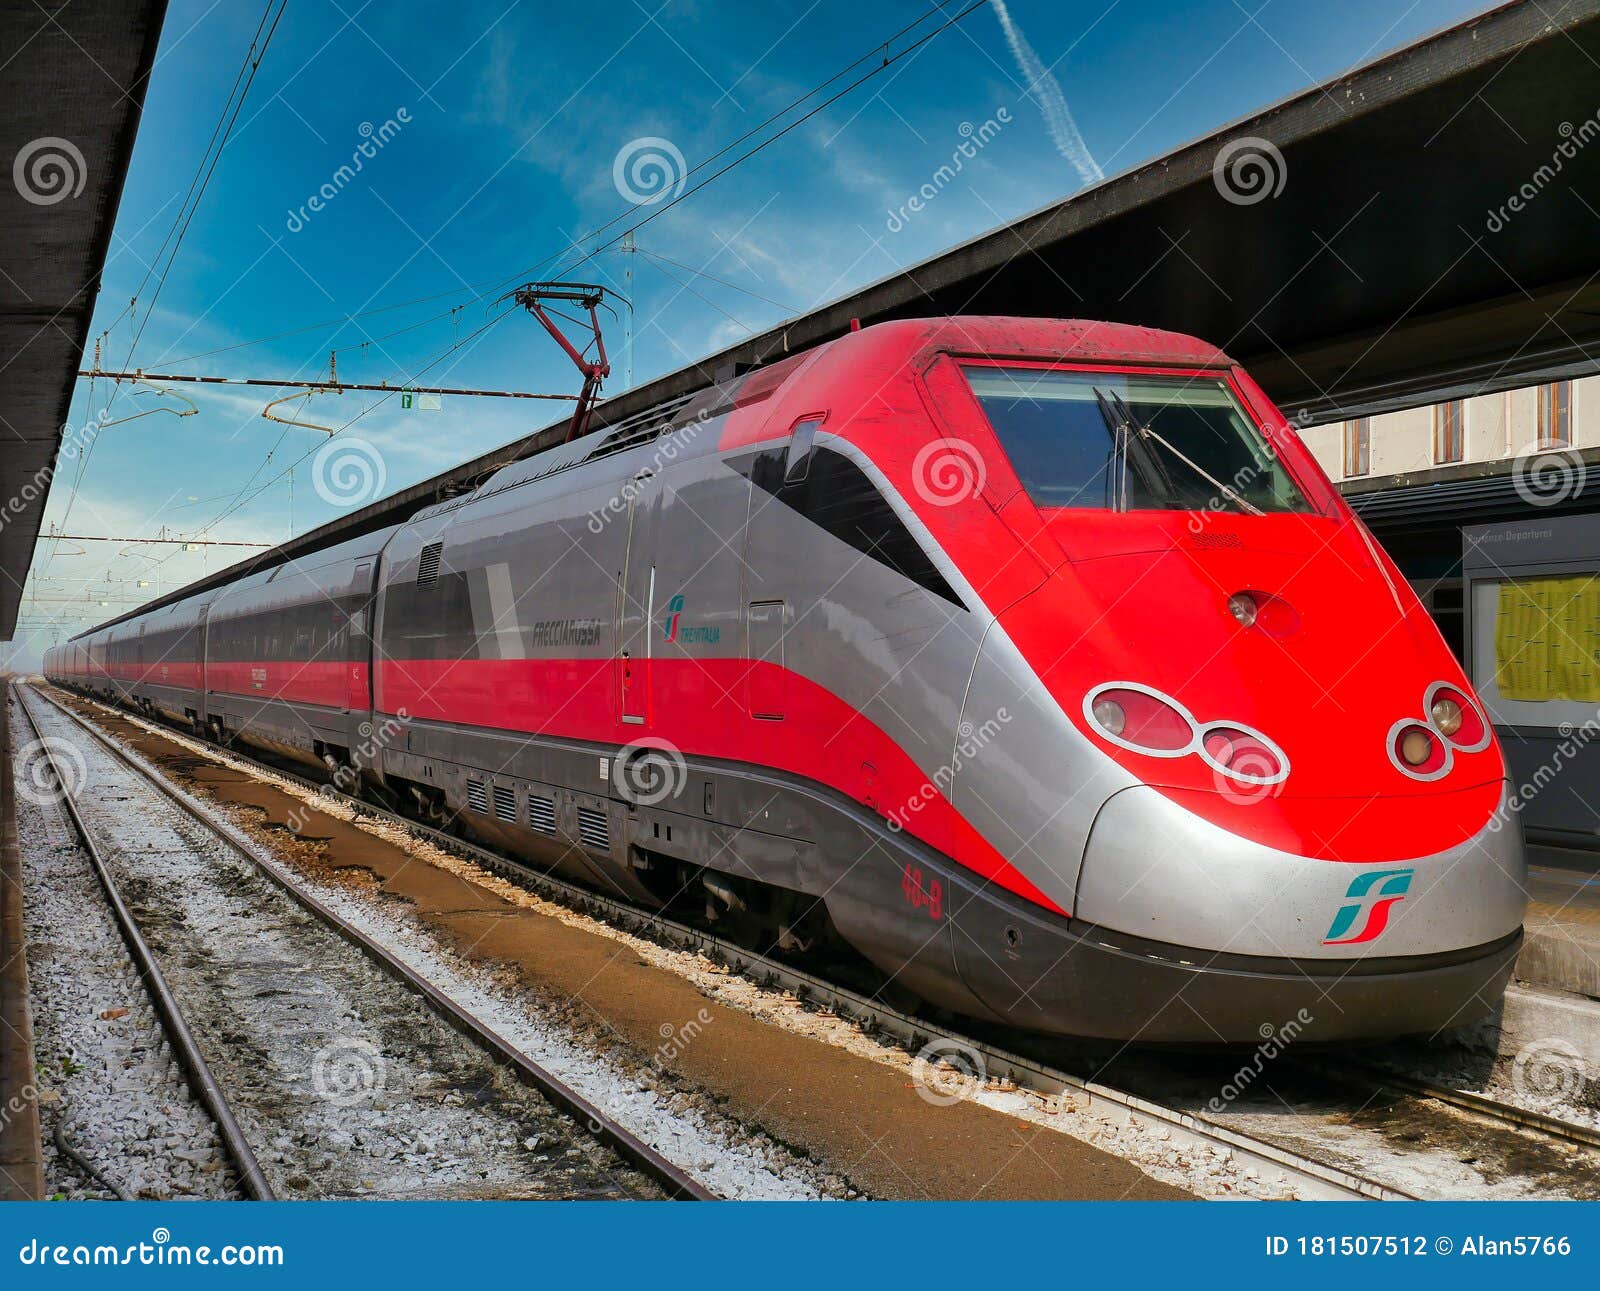 Trenitalia National Rail Operator, Italy Frecciarossa Red Arrow High Speed Train in Venice Editorial Photography - Image of trenitalia, locomotive: 181507512